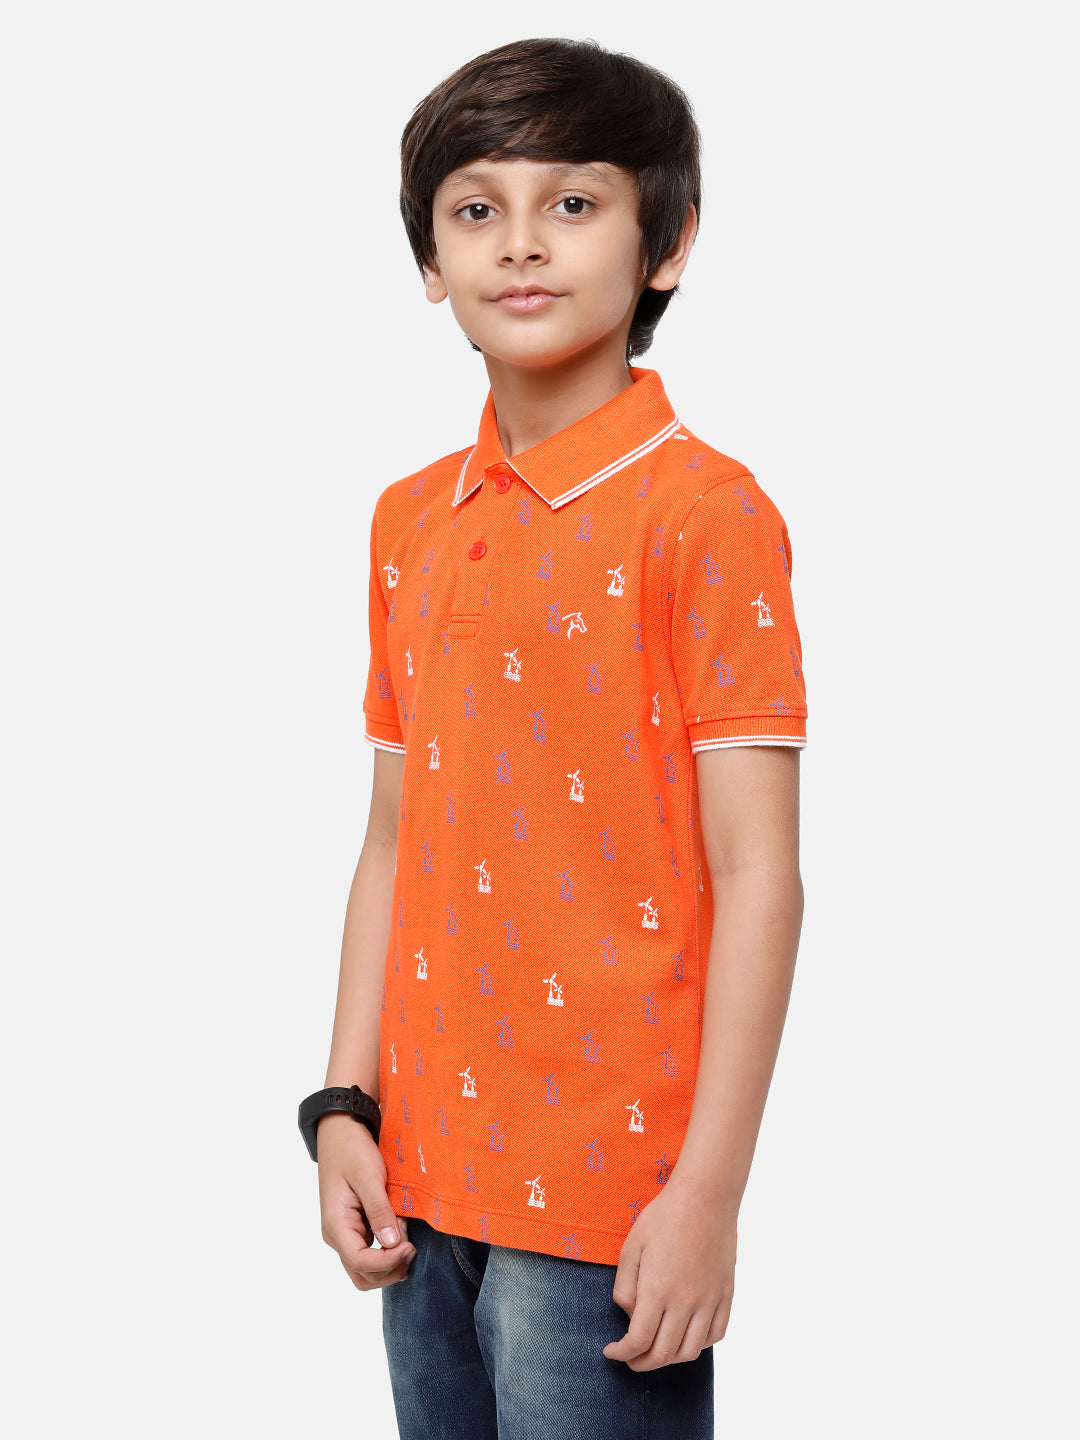 CP Boys Orange Printed Slim Fit Polo Neck T-Shirt T-shirt Classic Polo 